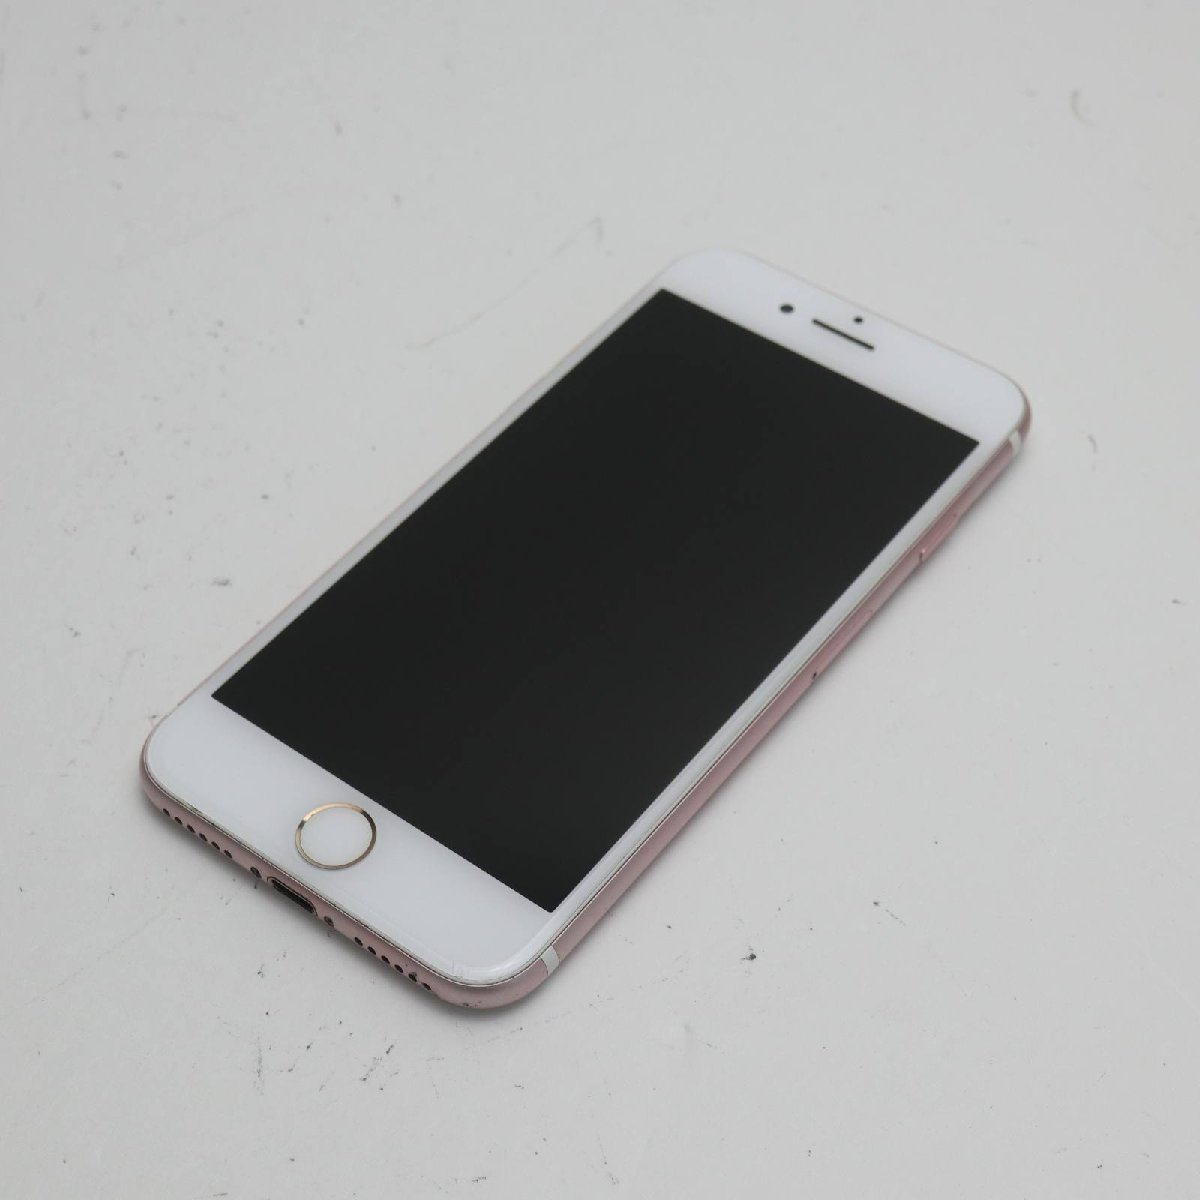 Apple iPhone7 32GB Black(黒色) 中古品